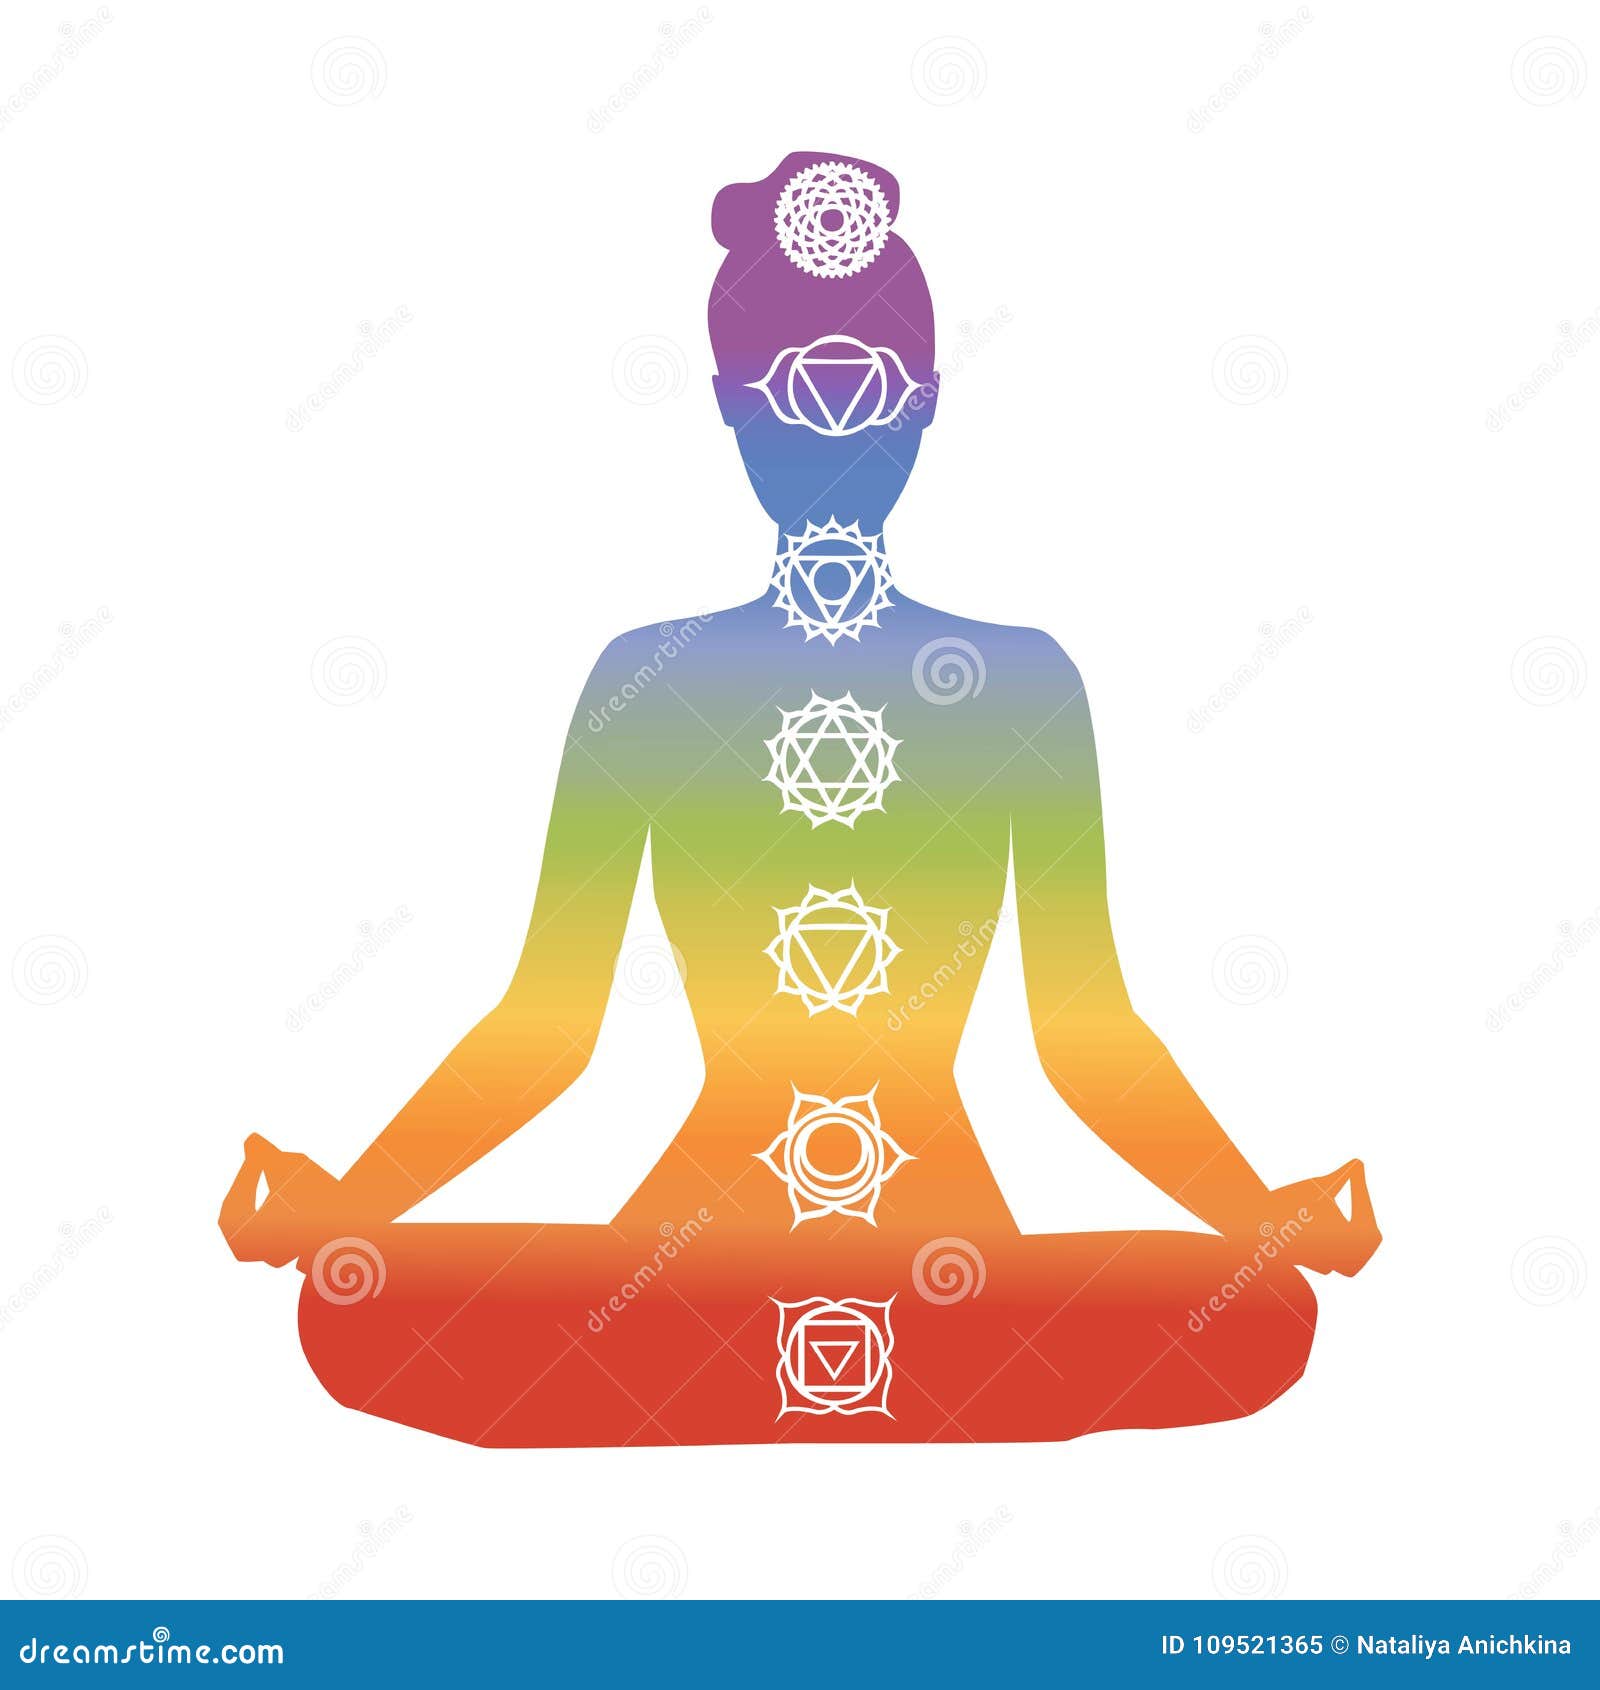 18x18 Multicolor Exercise Fitness Balance Workout Pilates Gift Yoga Mandala Colorful Chakra Meditation Balanced Spiritual Throw Pillow 